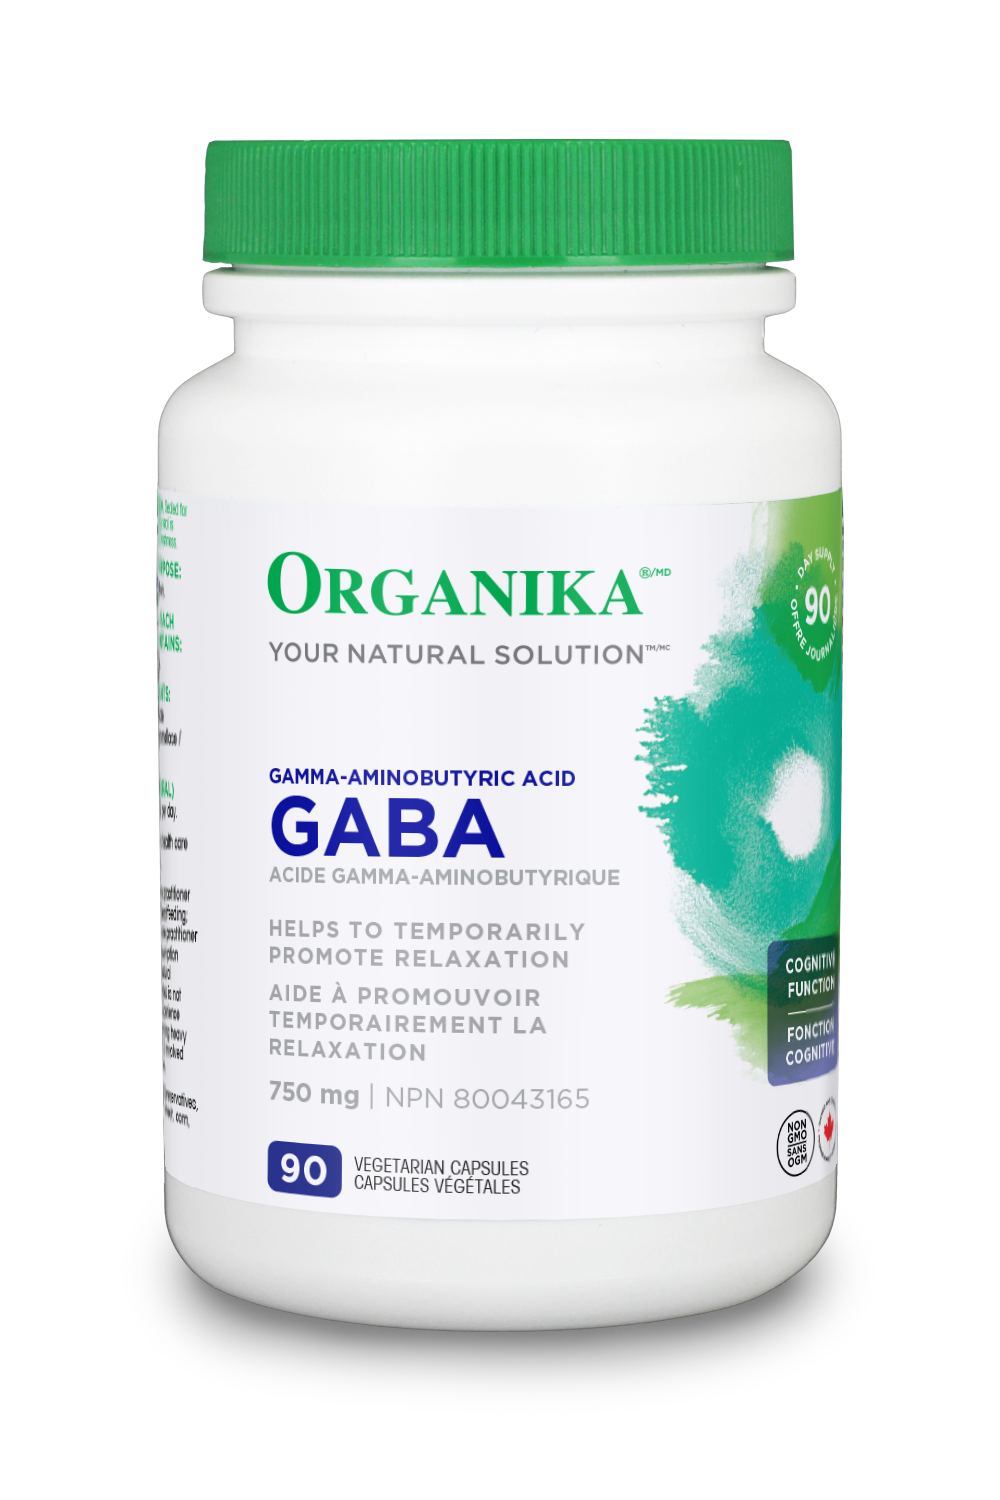 Organika - GABA (90 caps)